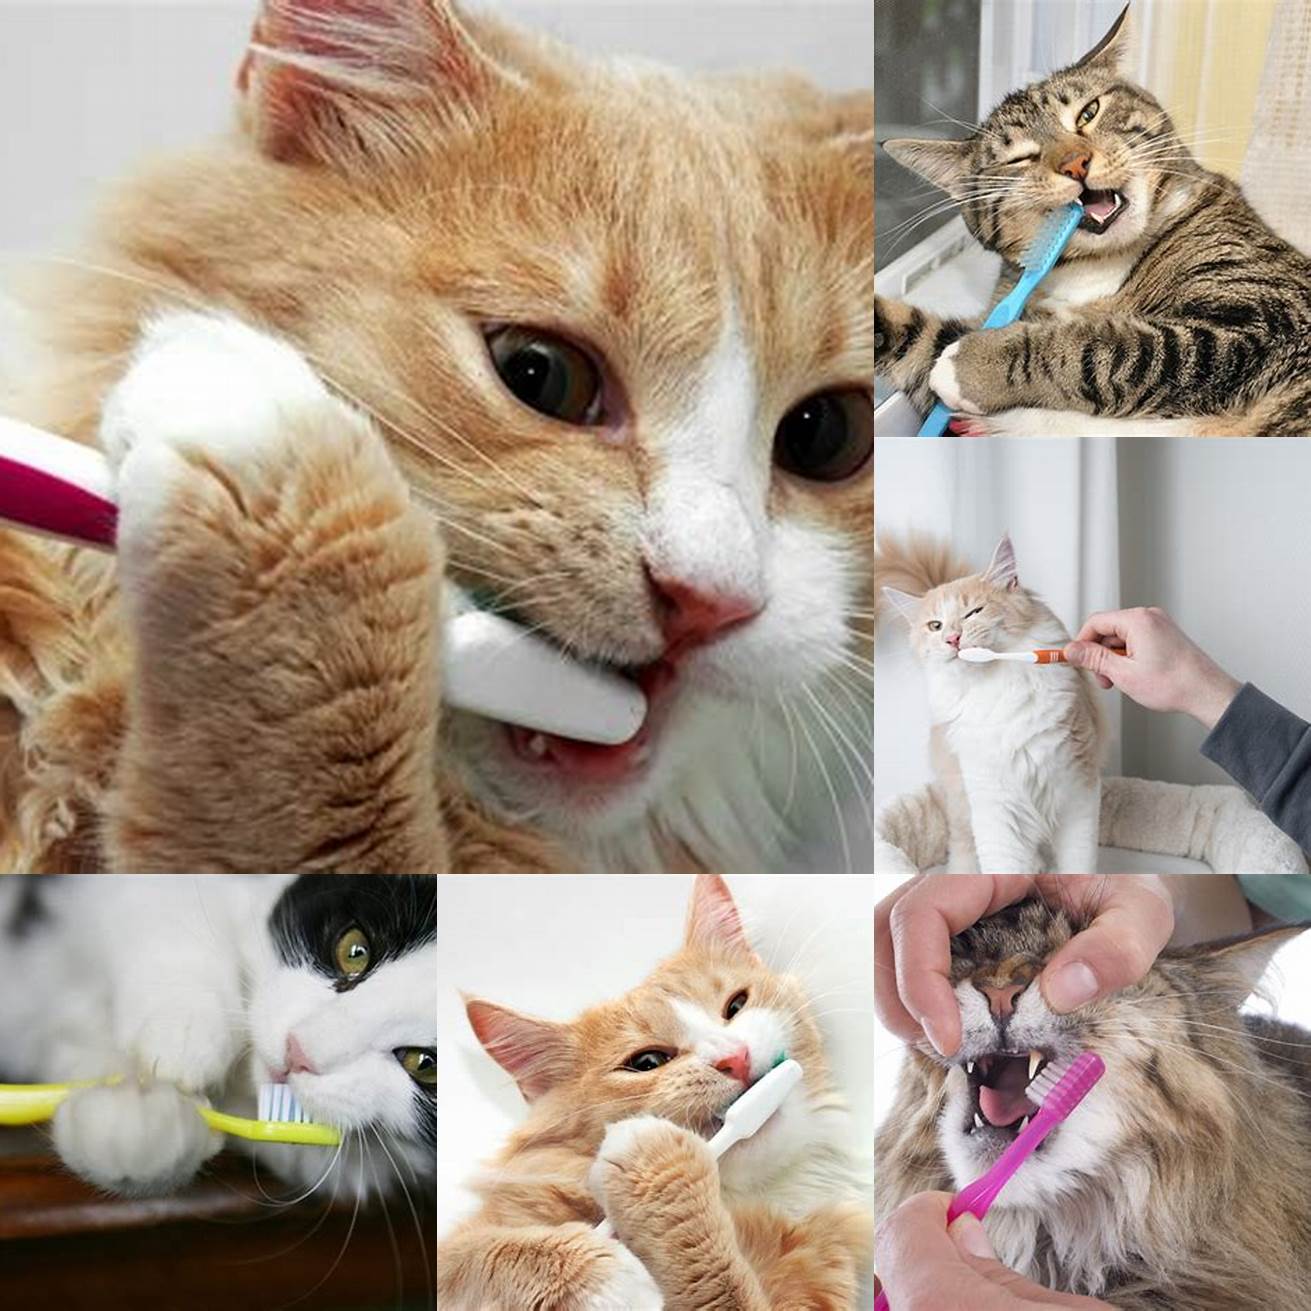 Brush your cats teeth regularly